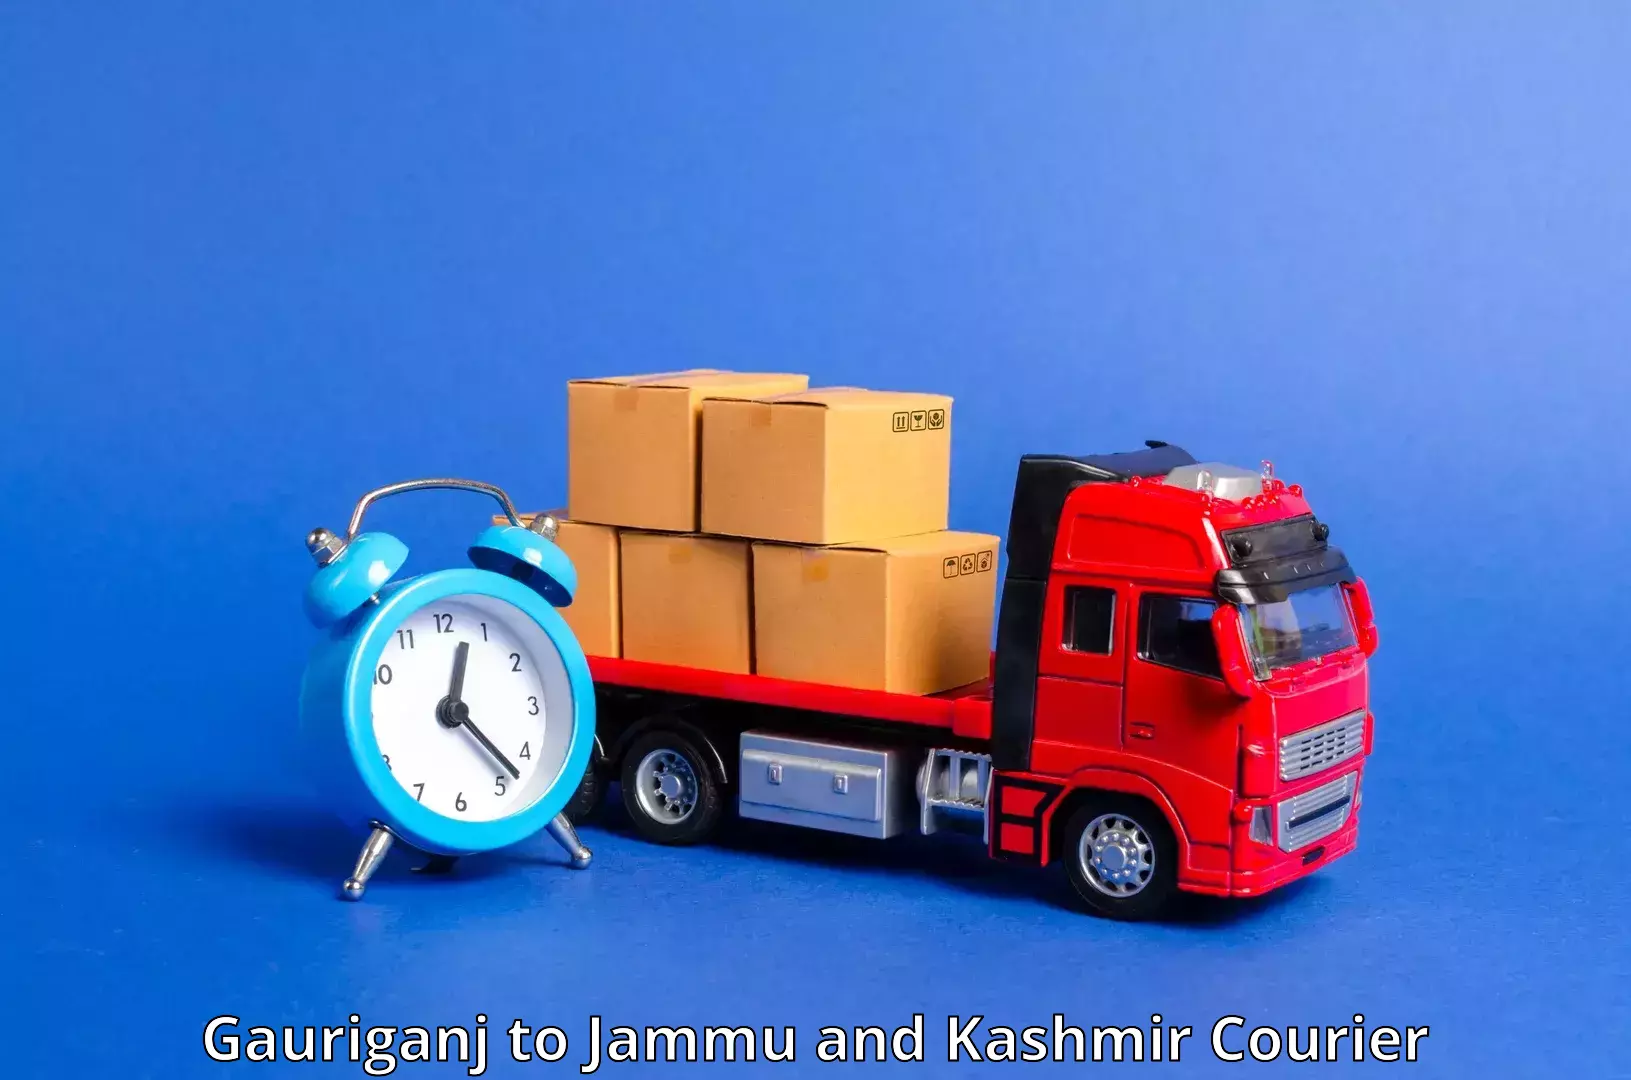 International parcel service Gauriganj to Leh